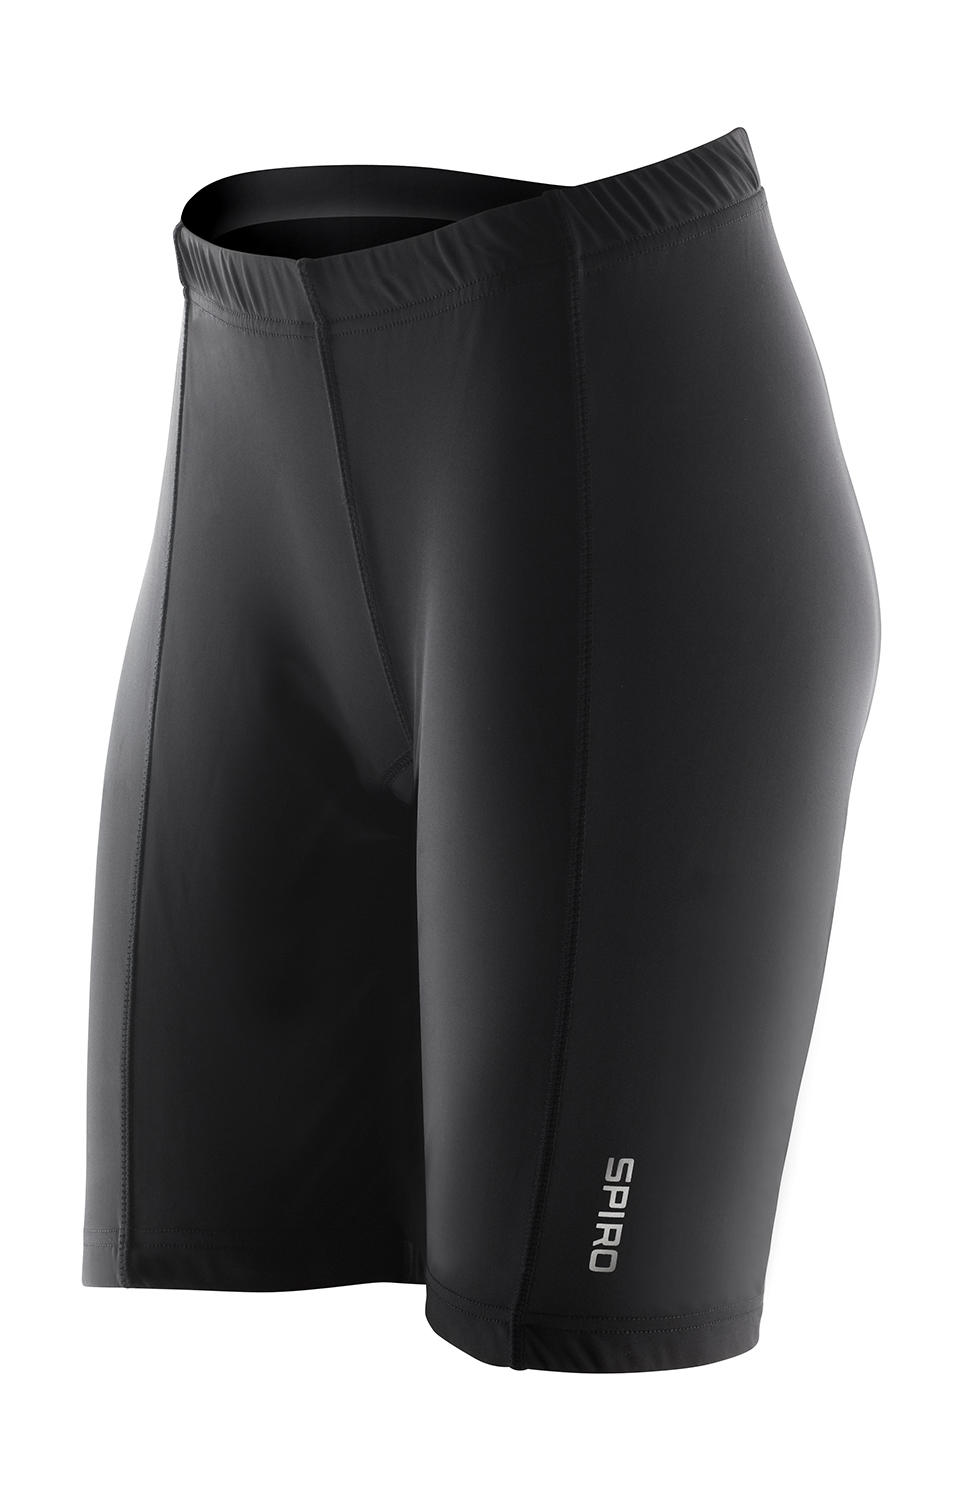  Ladies Padded Bike Shorts in Farbe Black